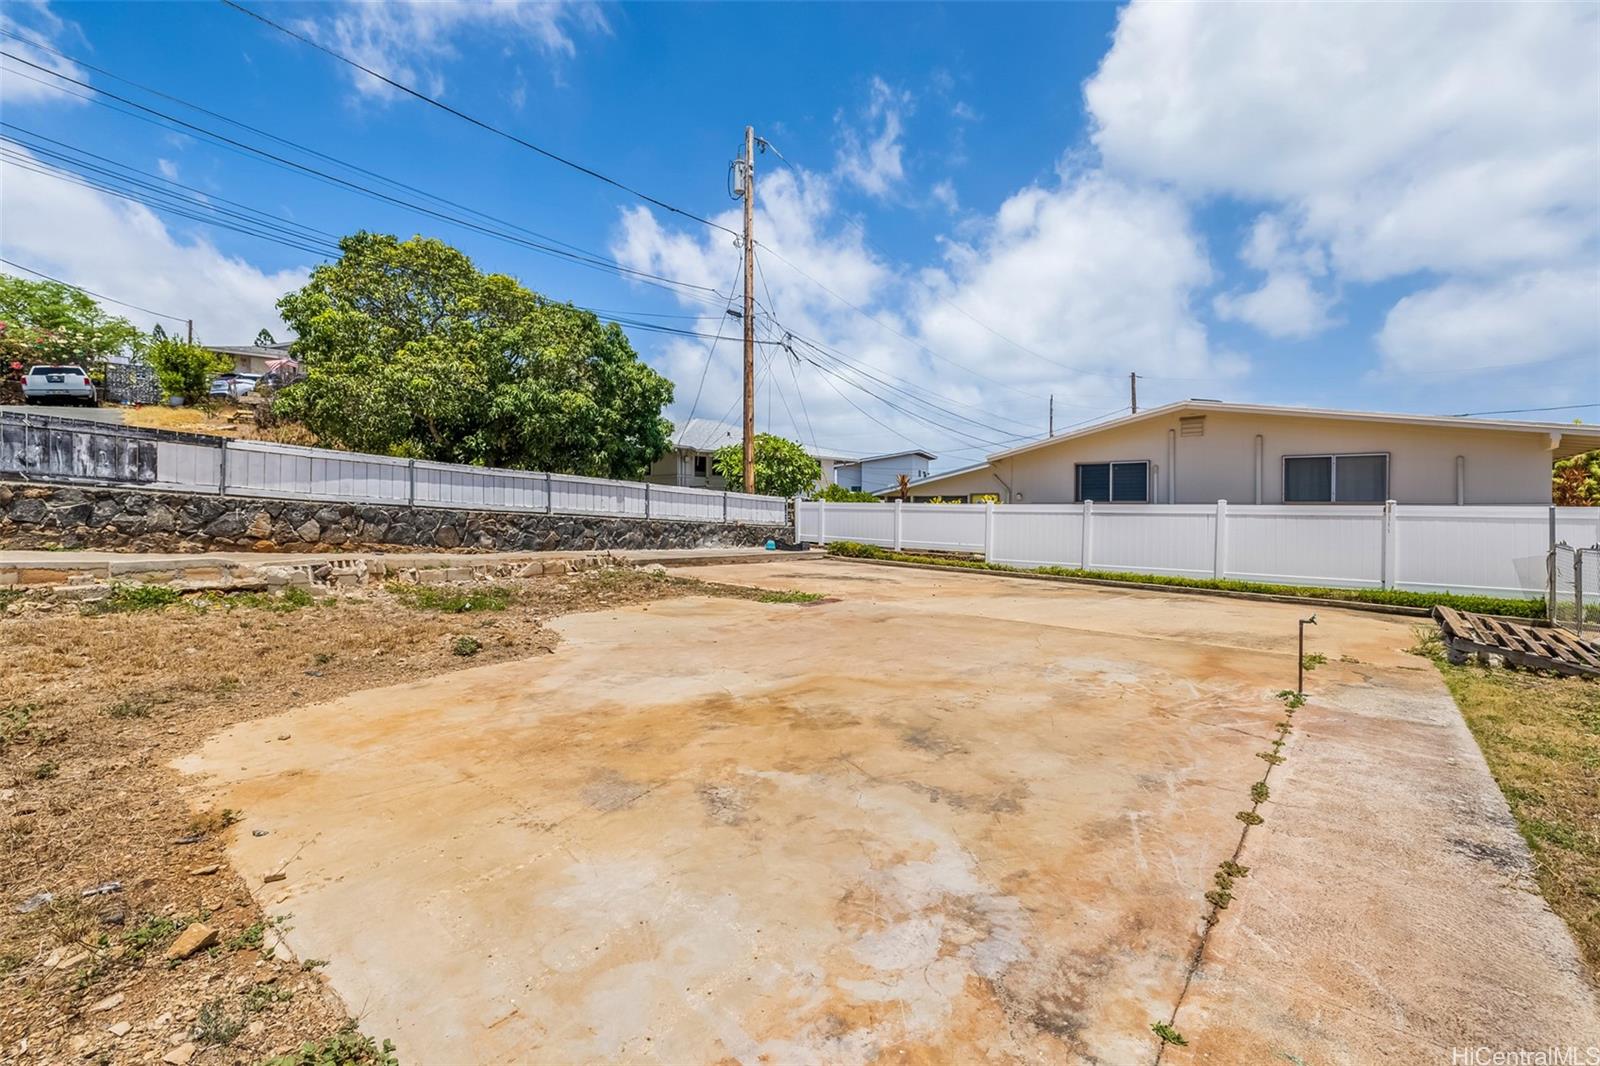 733 Luakaha St A Honolulu, Hi vacant land for sale - photo 3 of 7